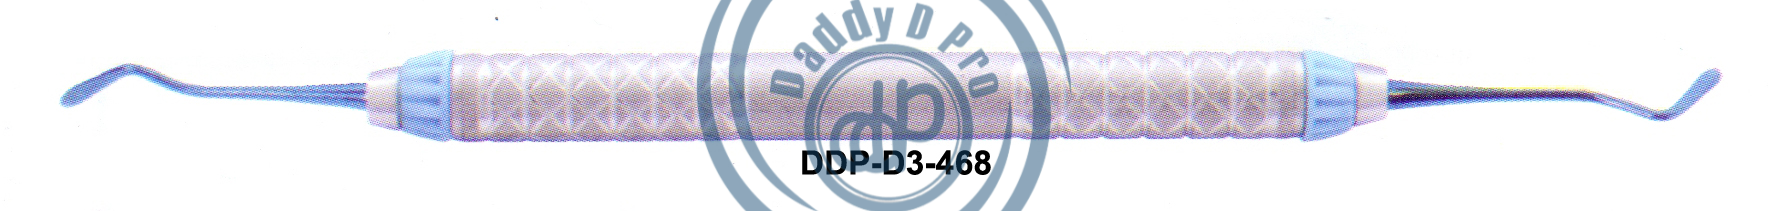 images/DDP-D3-468.png